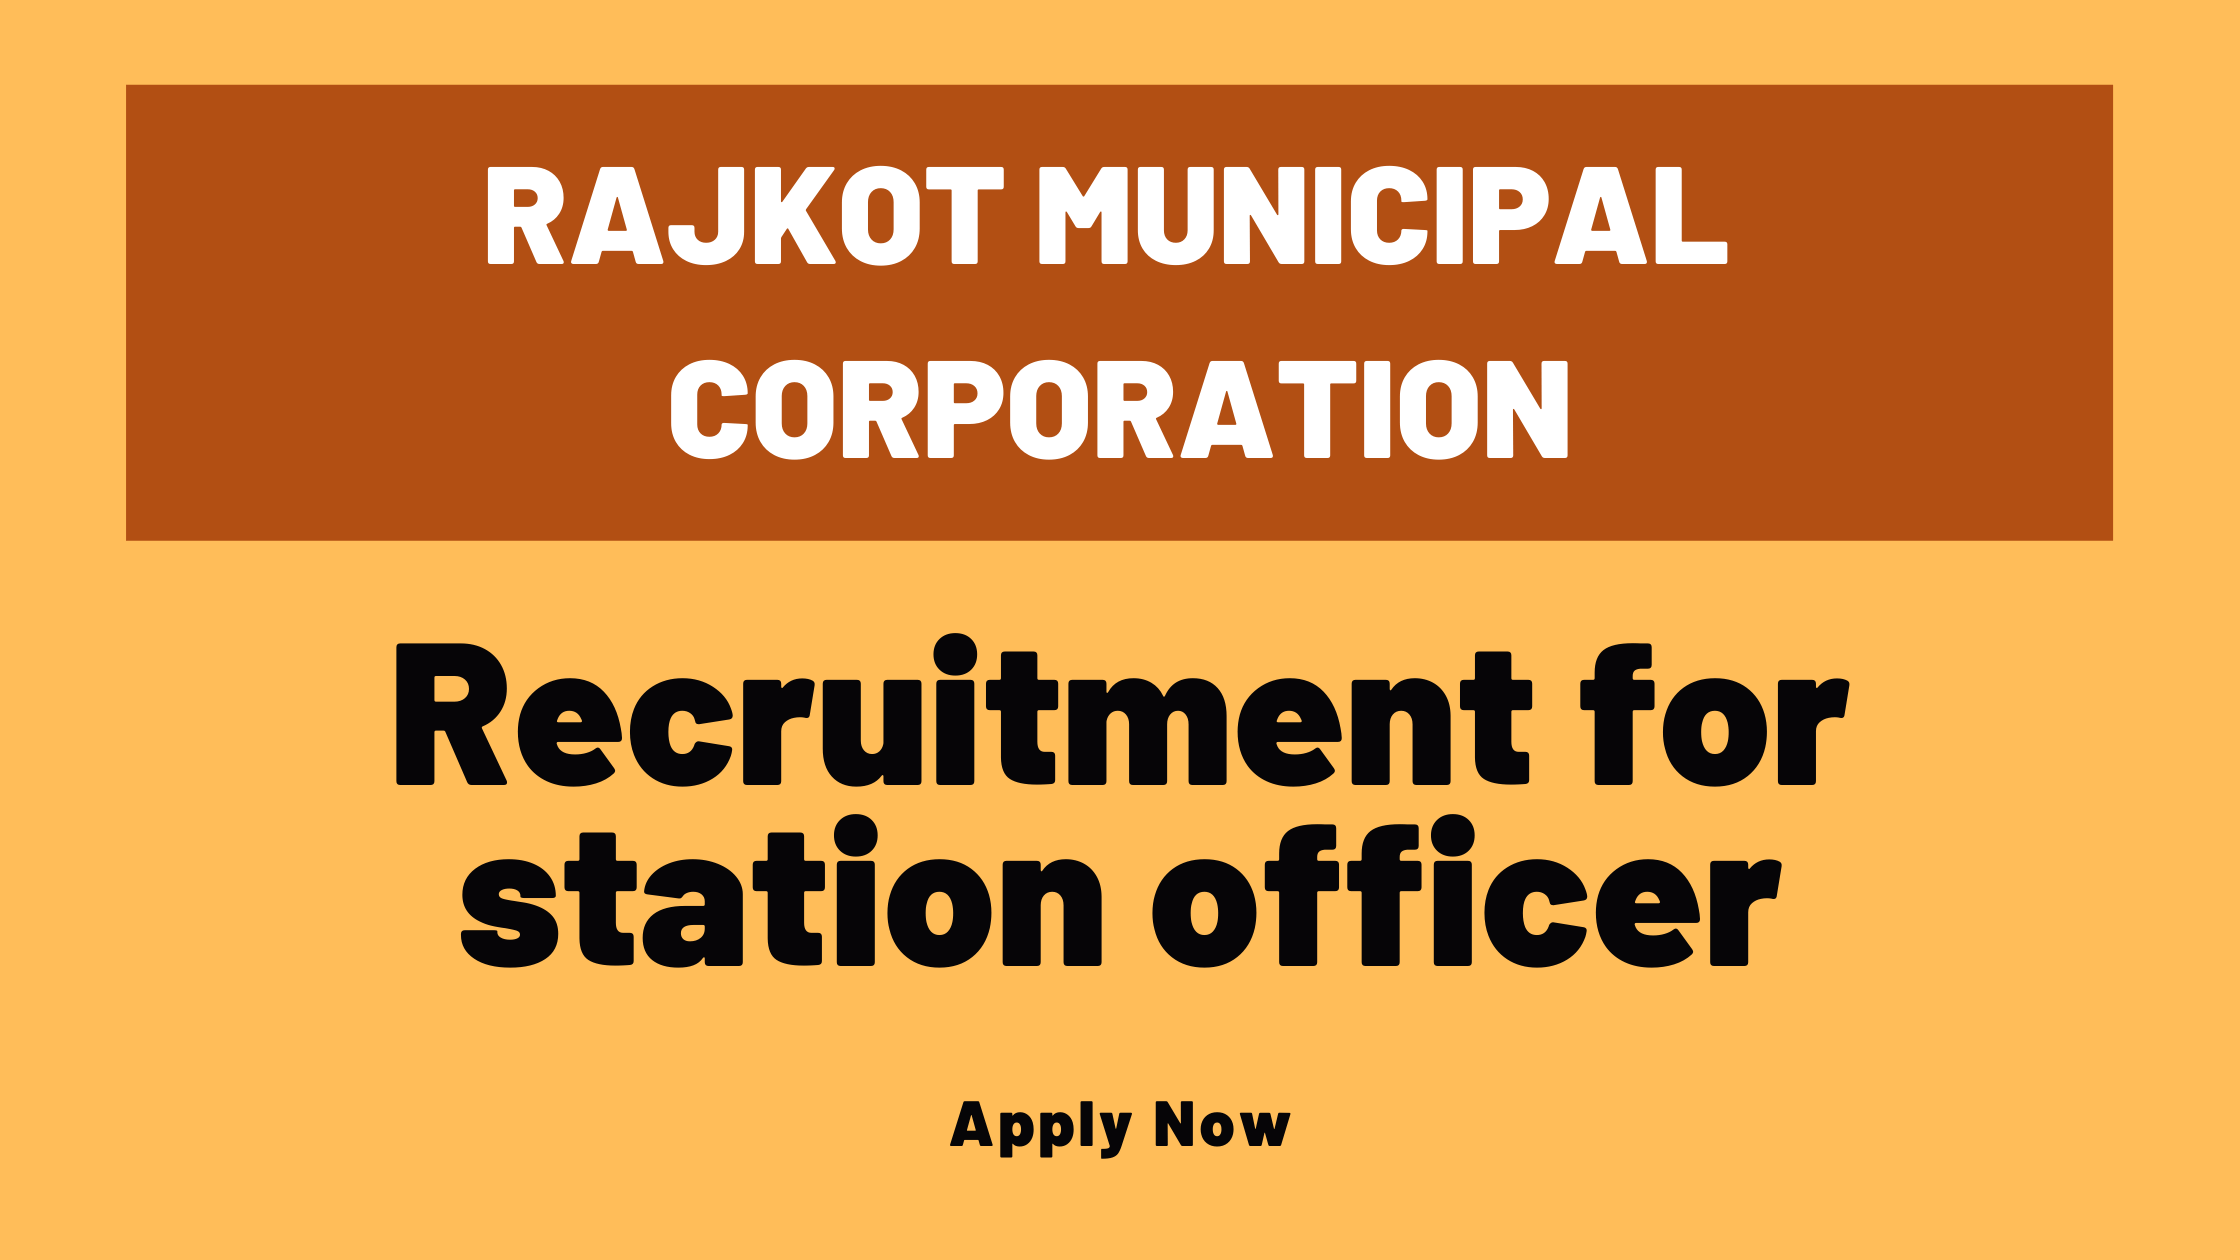 Rajkot Municipal Corporation Recruitment for Station Officer.